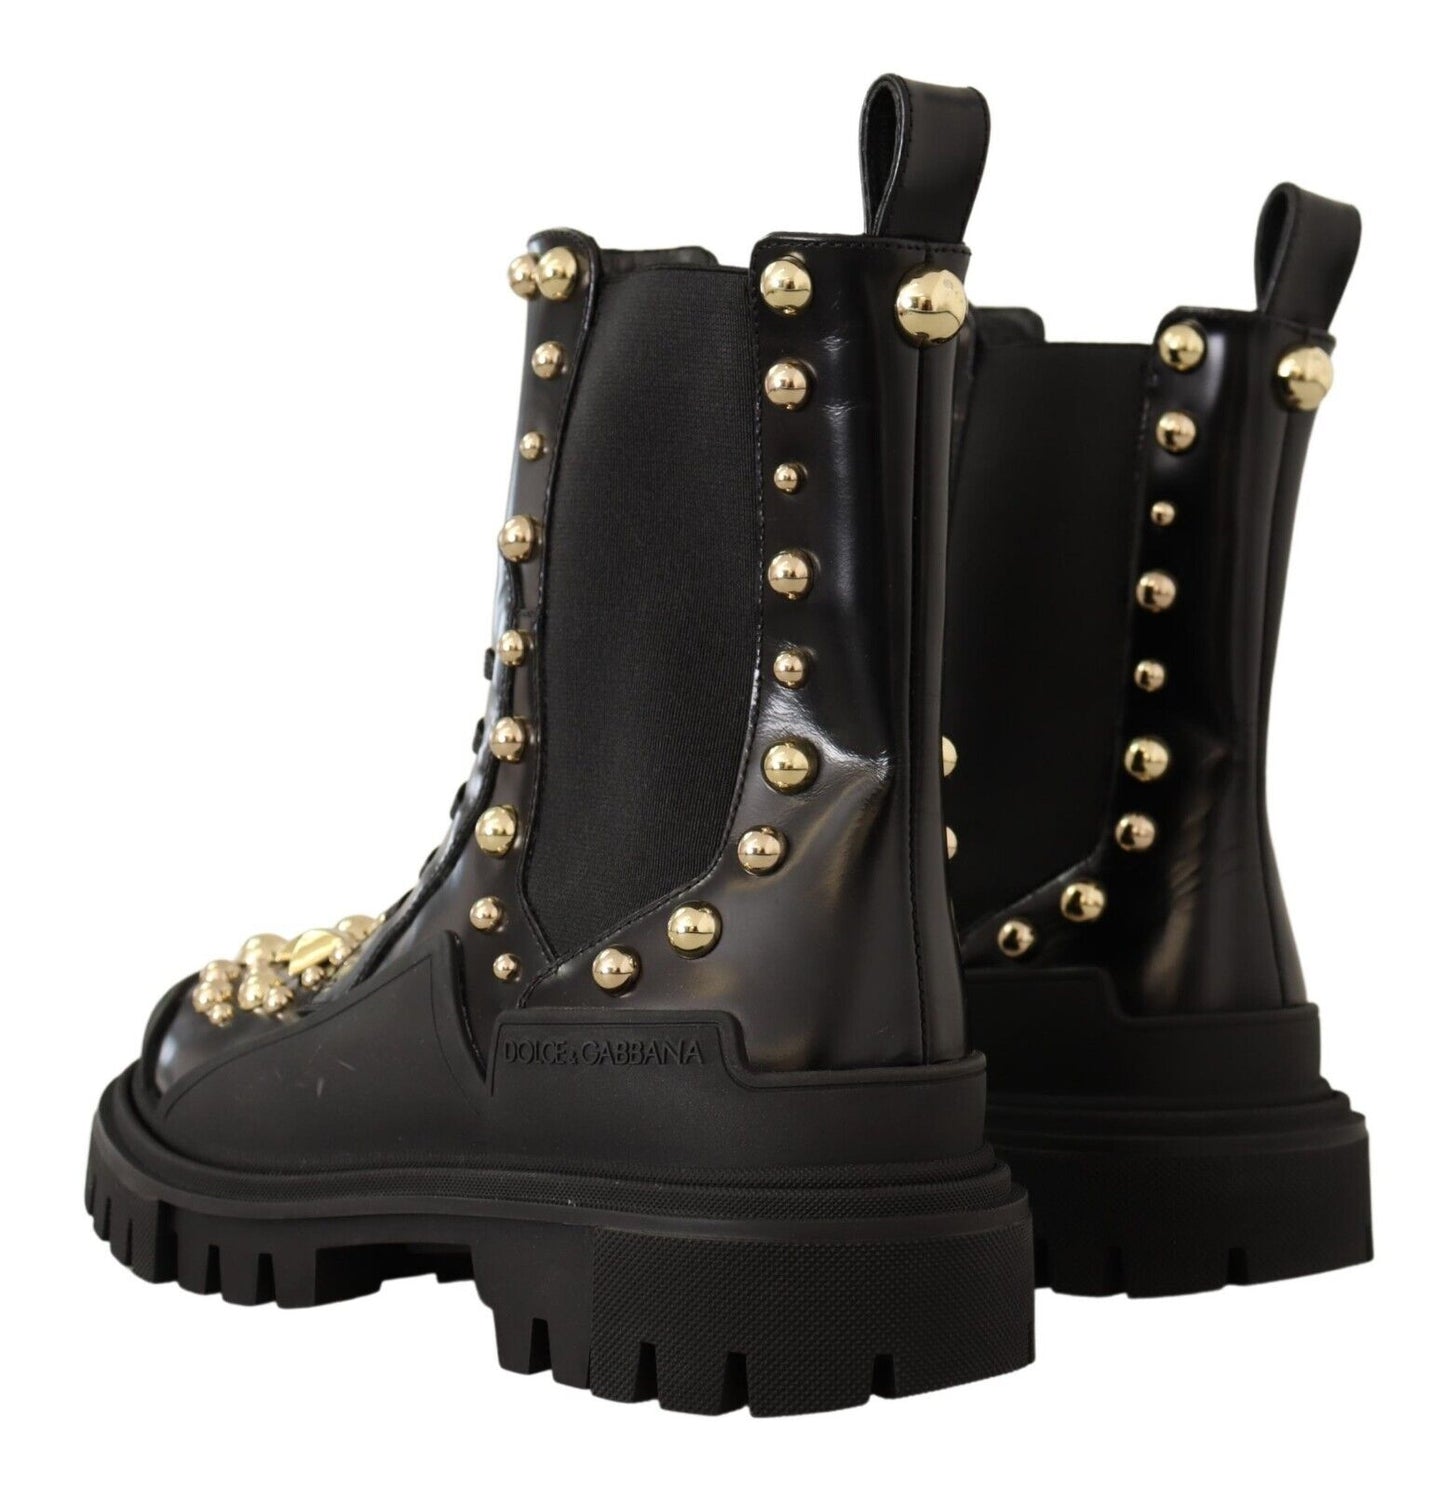 Dolce & Gabbana Black Leather Studded Combat Boots - DEA STILOSA MILANO